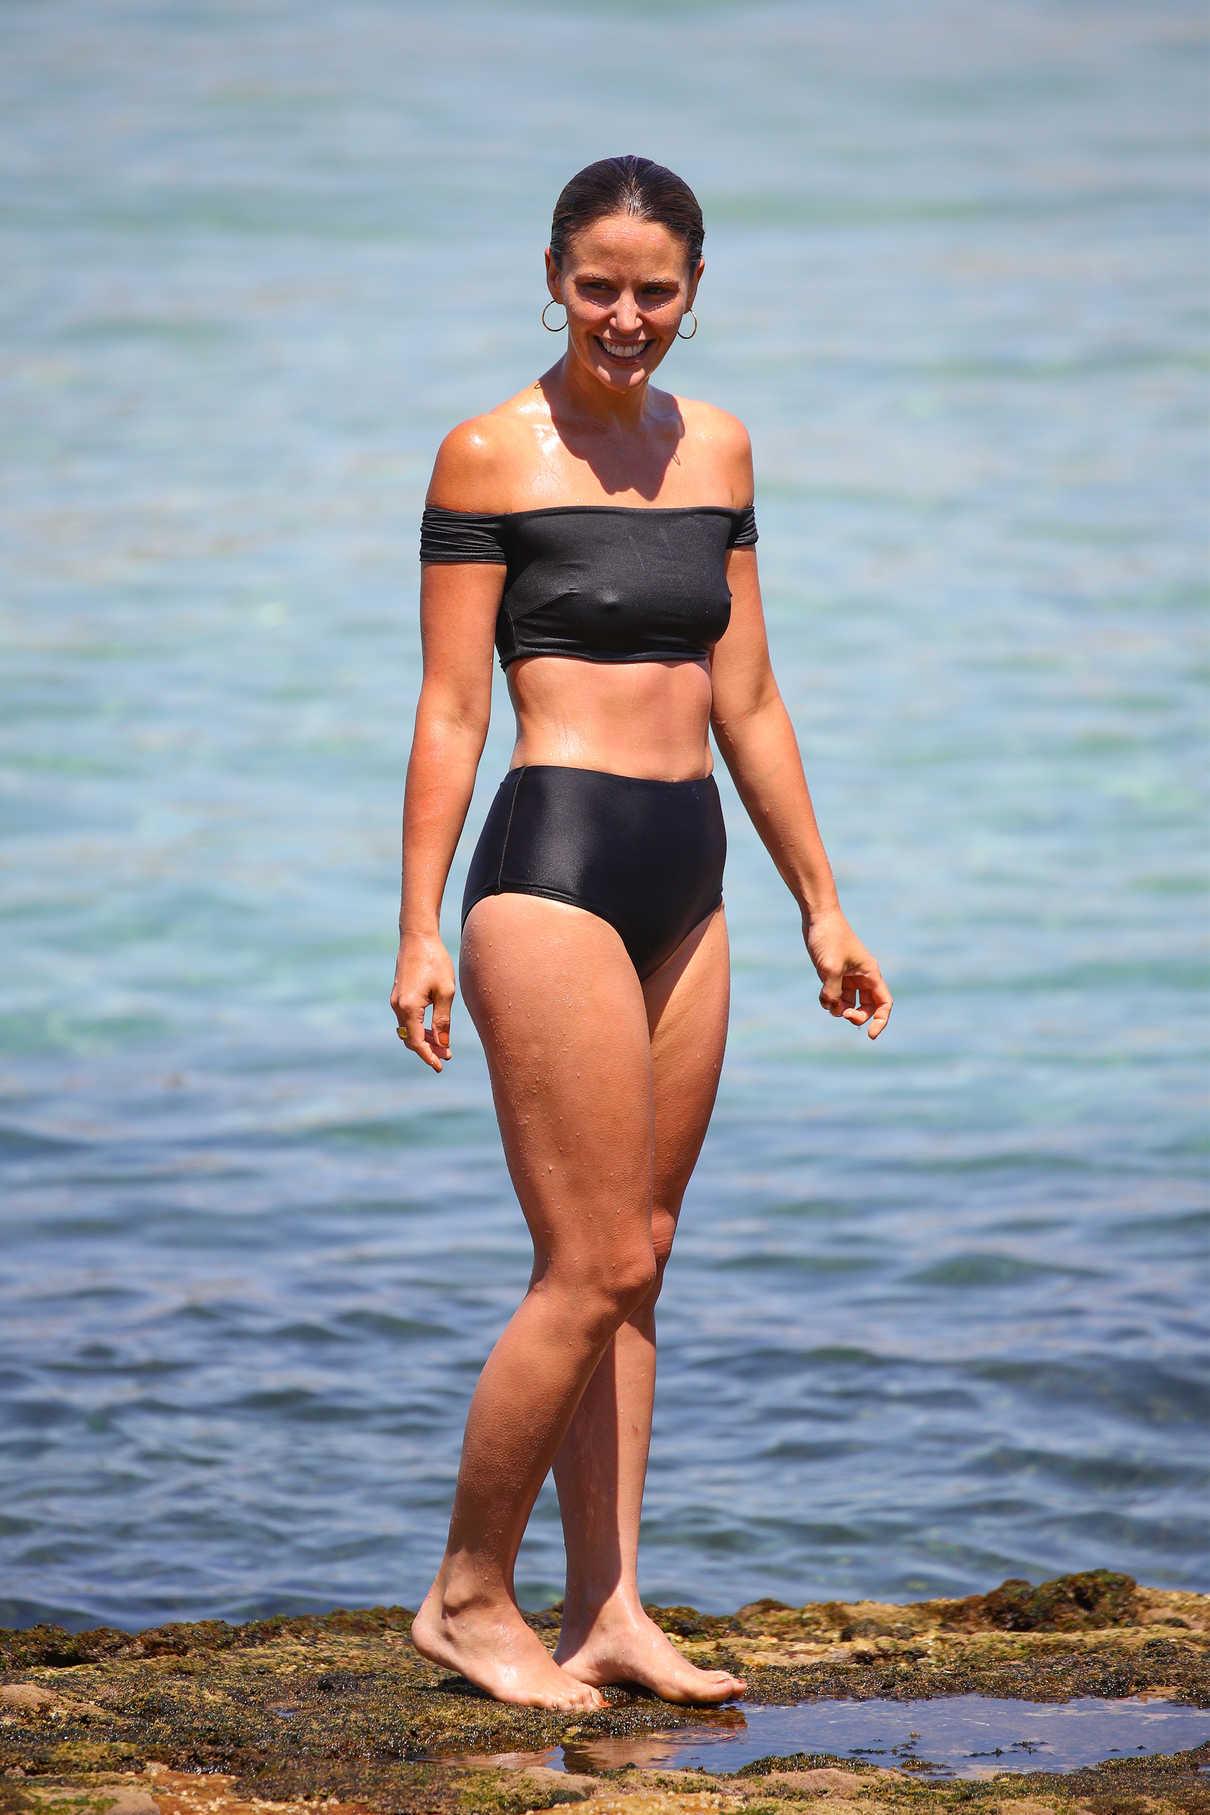 Jodi Gordon in a Black Bikini